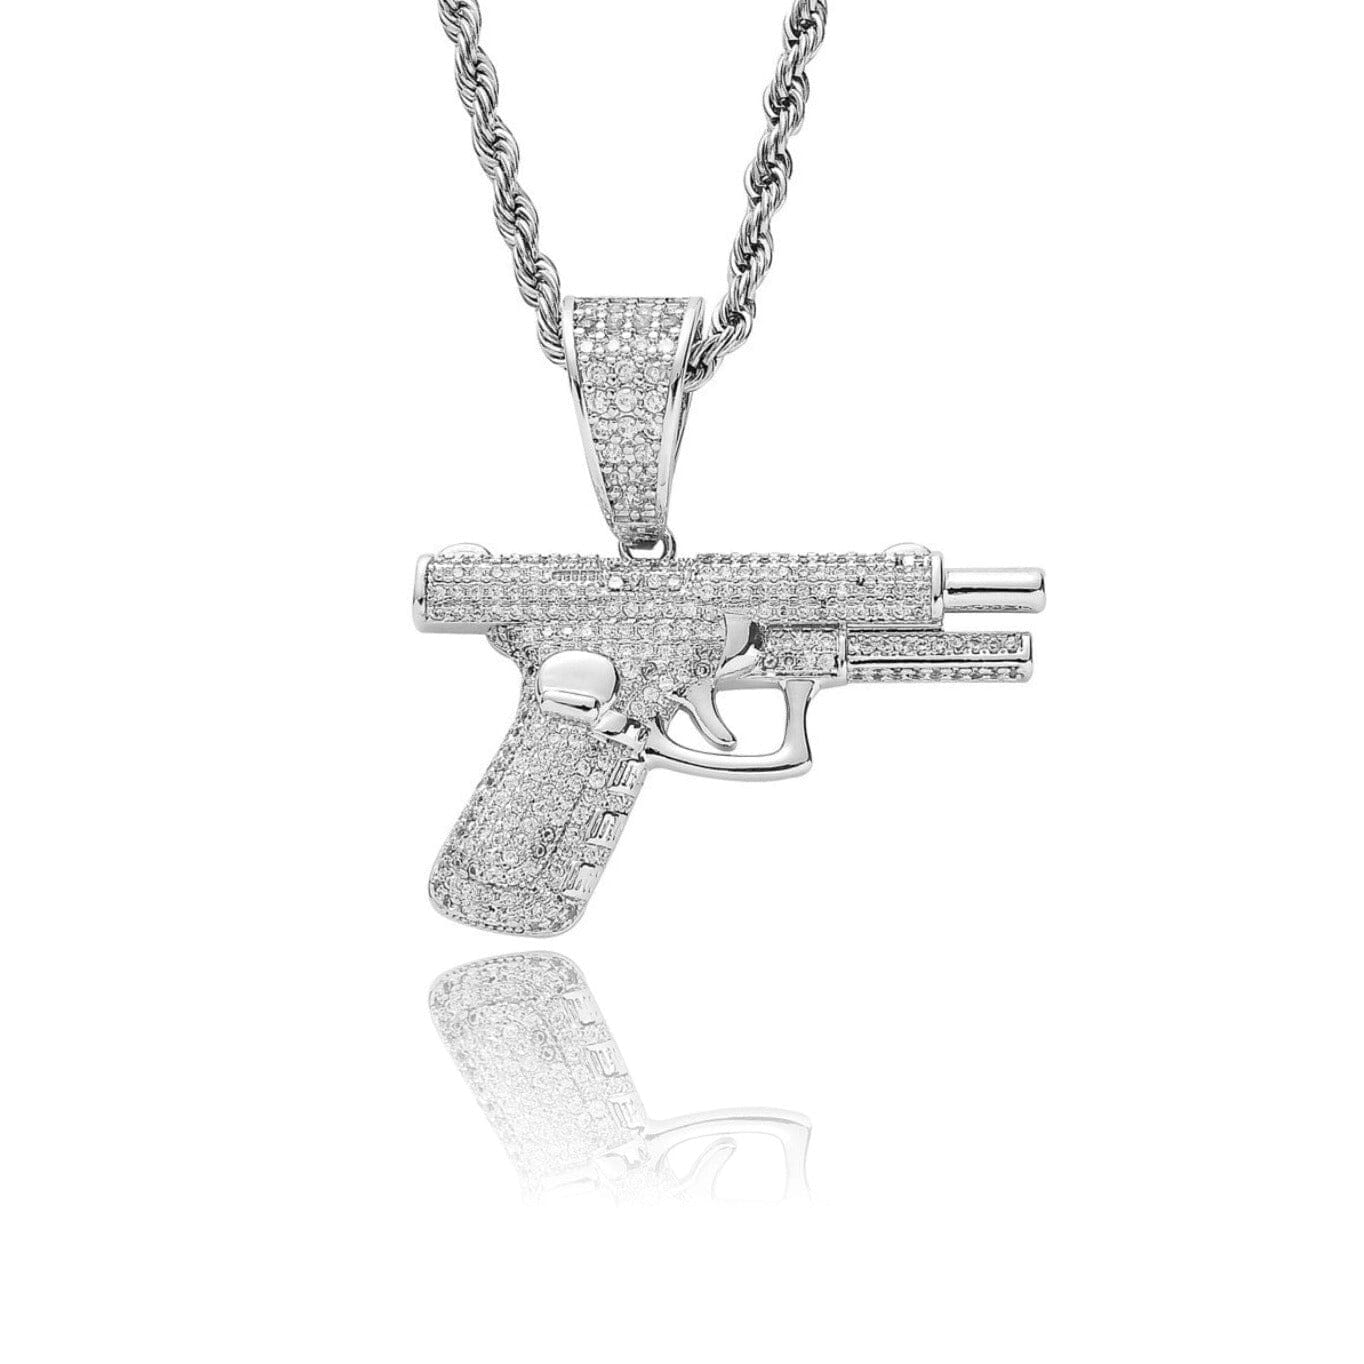 Pistol Handgun Pendant - 1.5inch Charms & Pendants Brass with CZ Stone Free Rope Chain White Gold